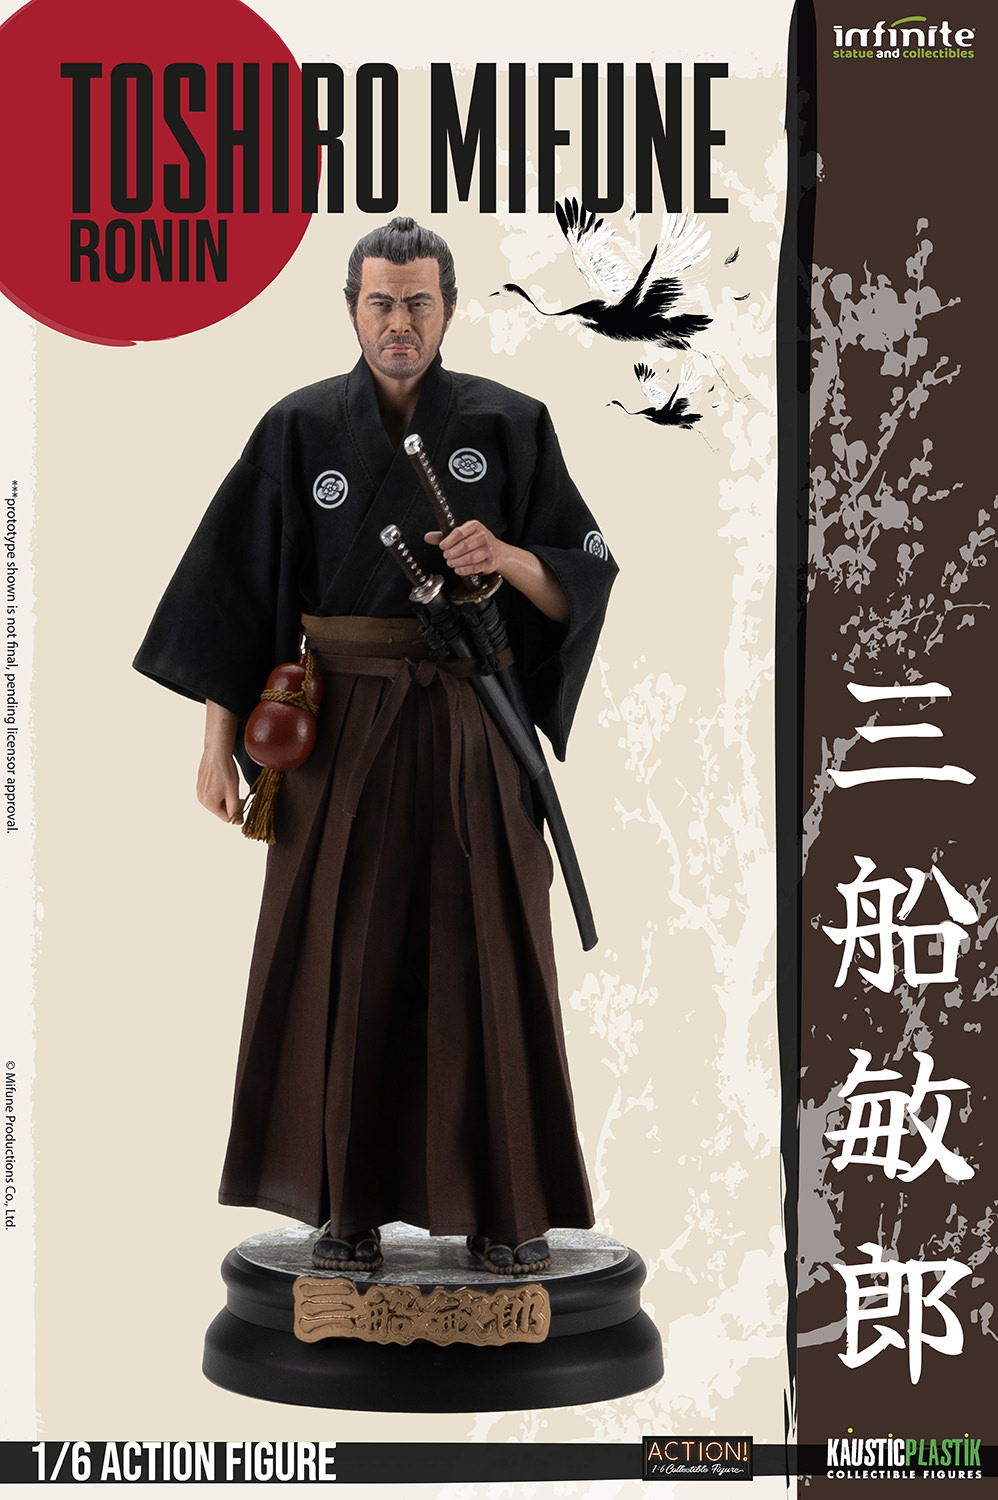 Pre-Order Infinite Statue Toshiro Mifune Ronin Sixth Scale Figure